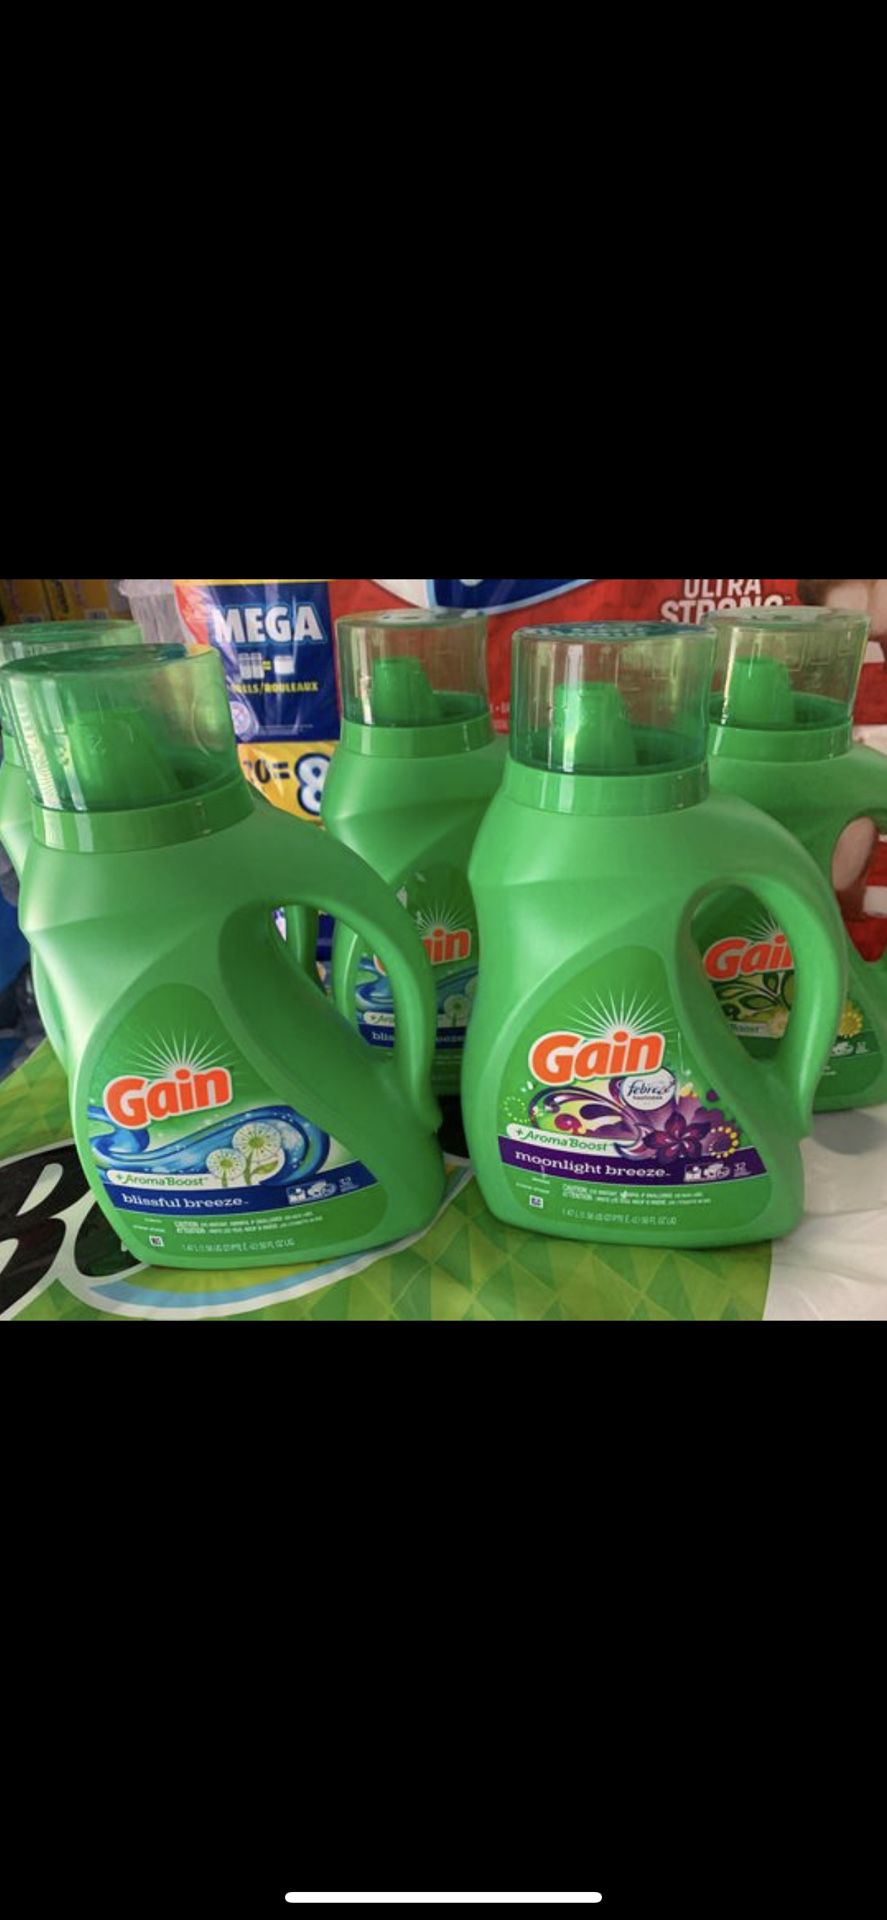 Gain laundry detergent